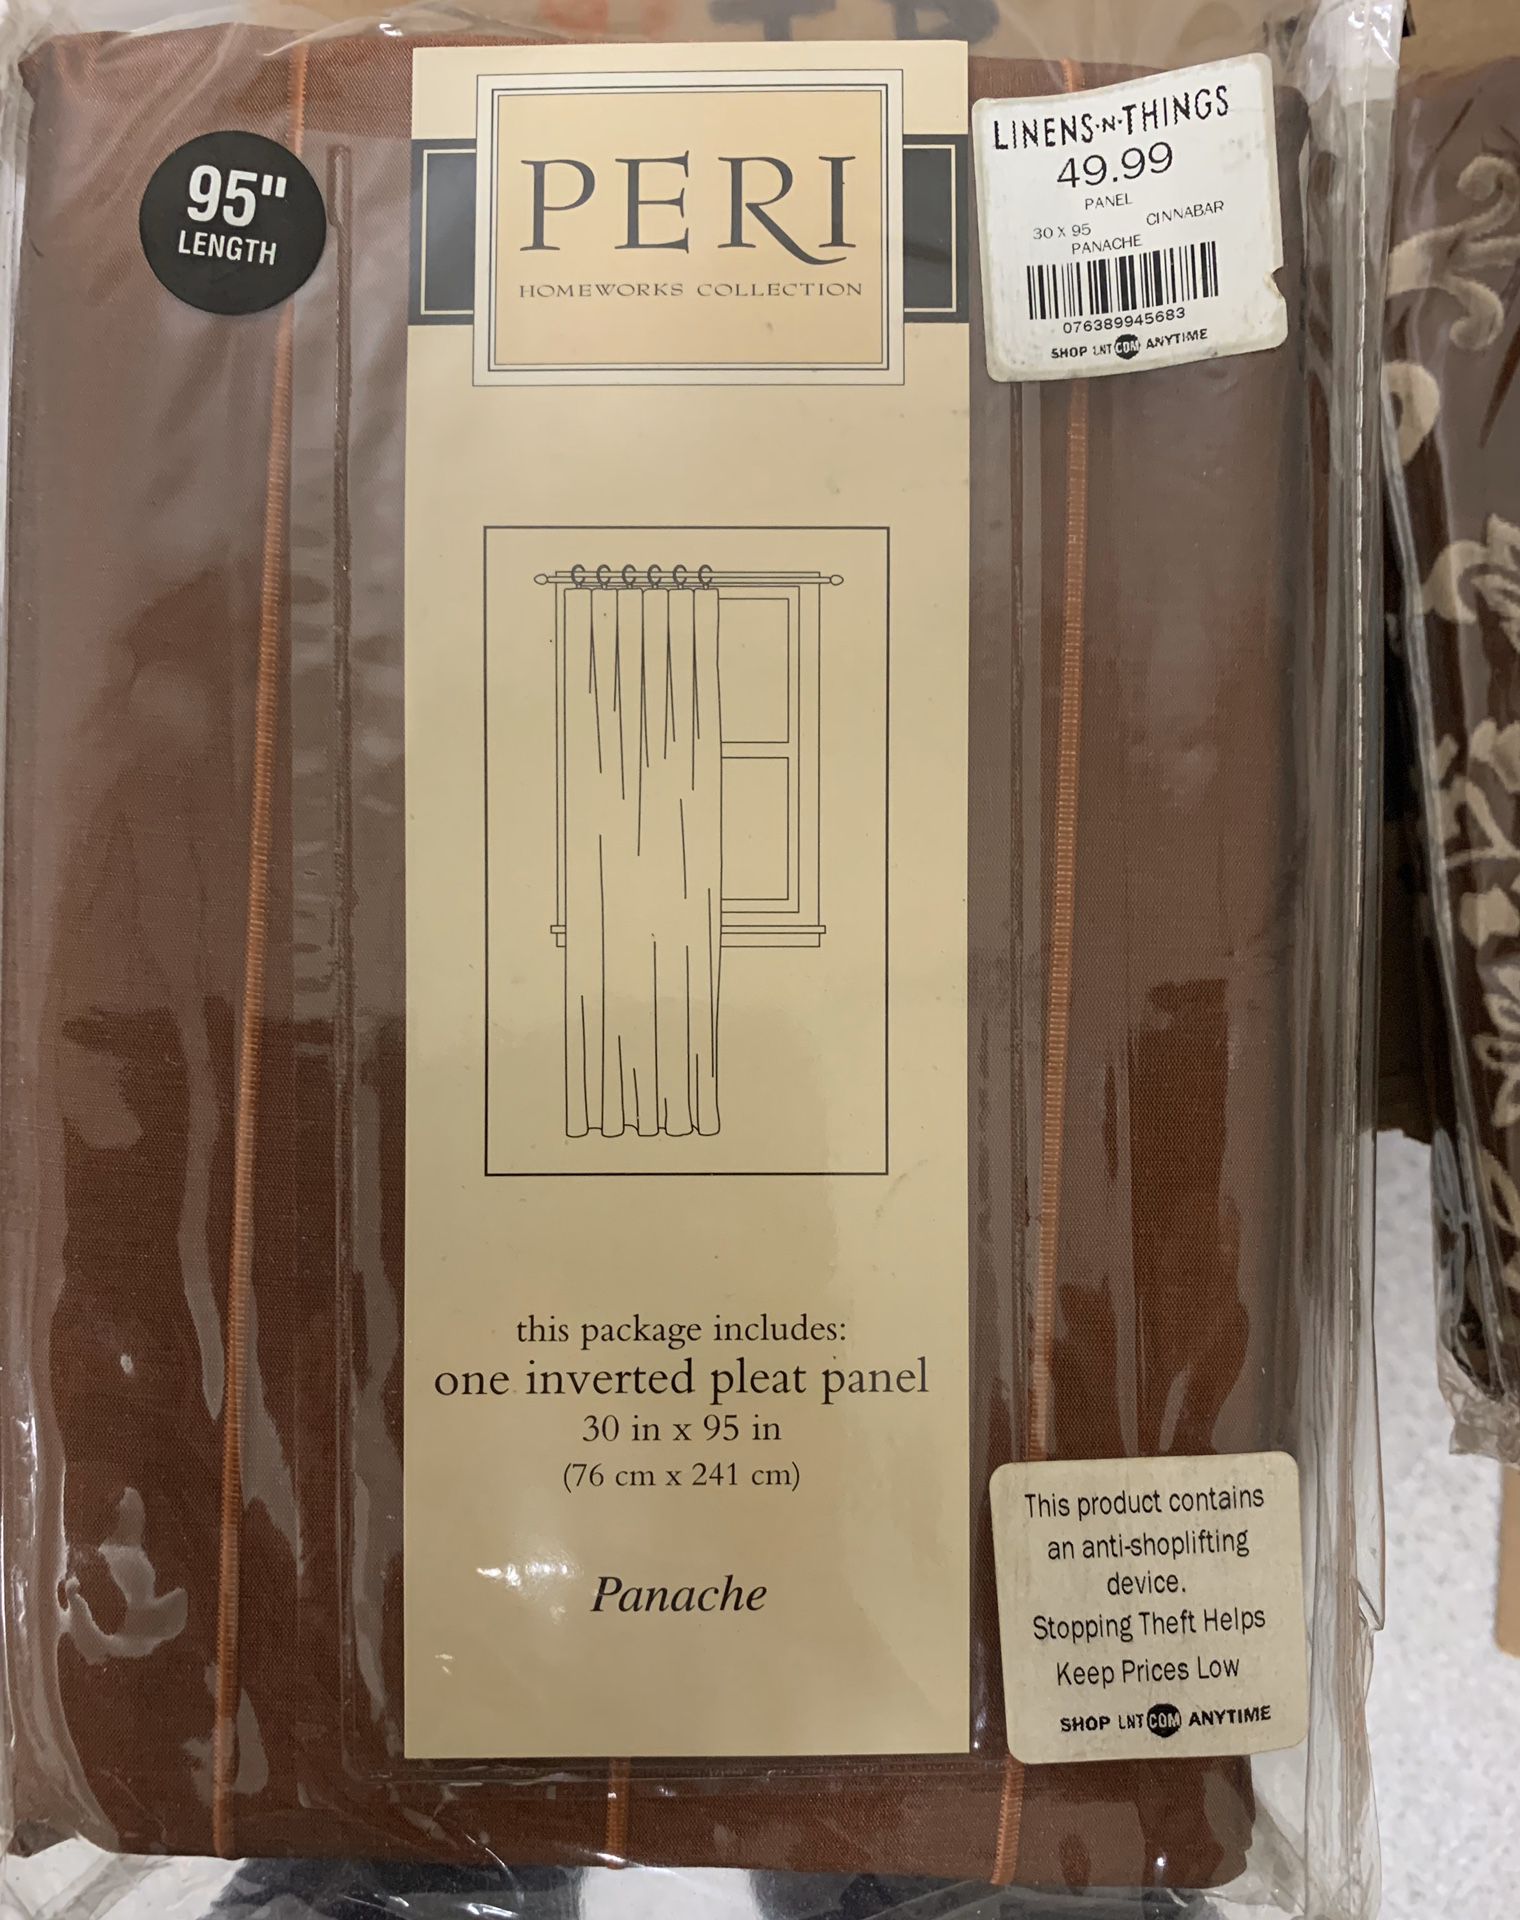 Peri Homeworks Collection Inverted Pleat Panel: Panache 30" X 95"